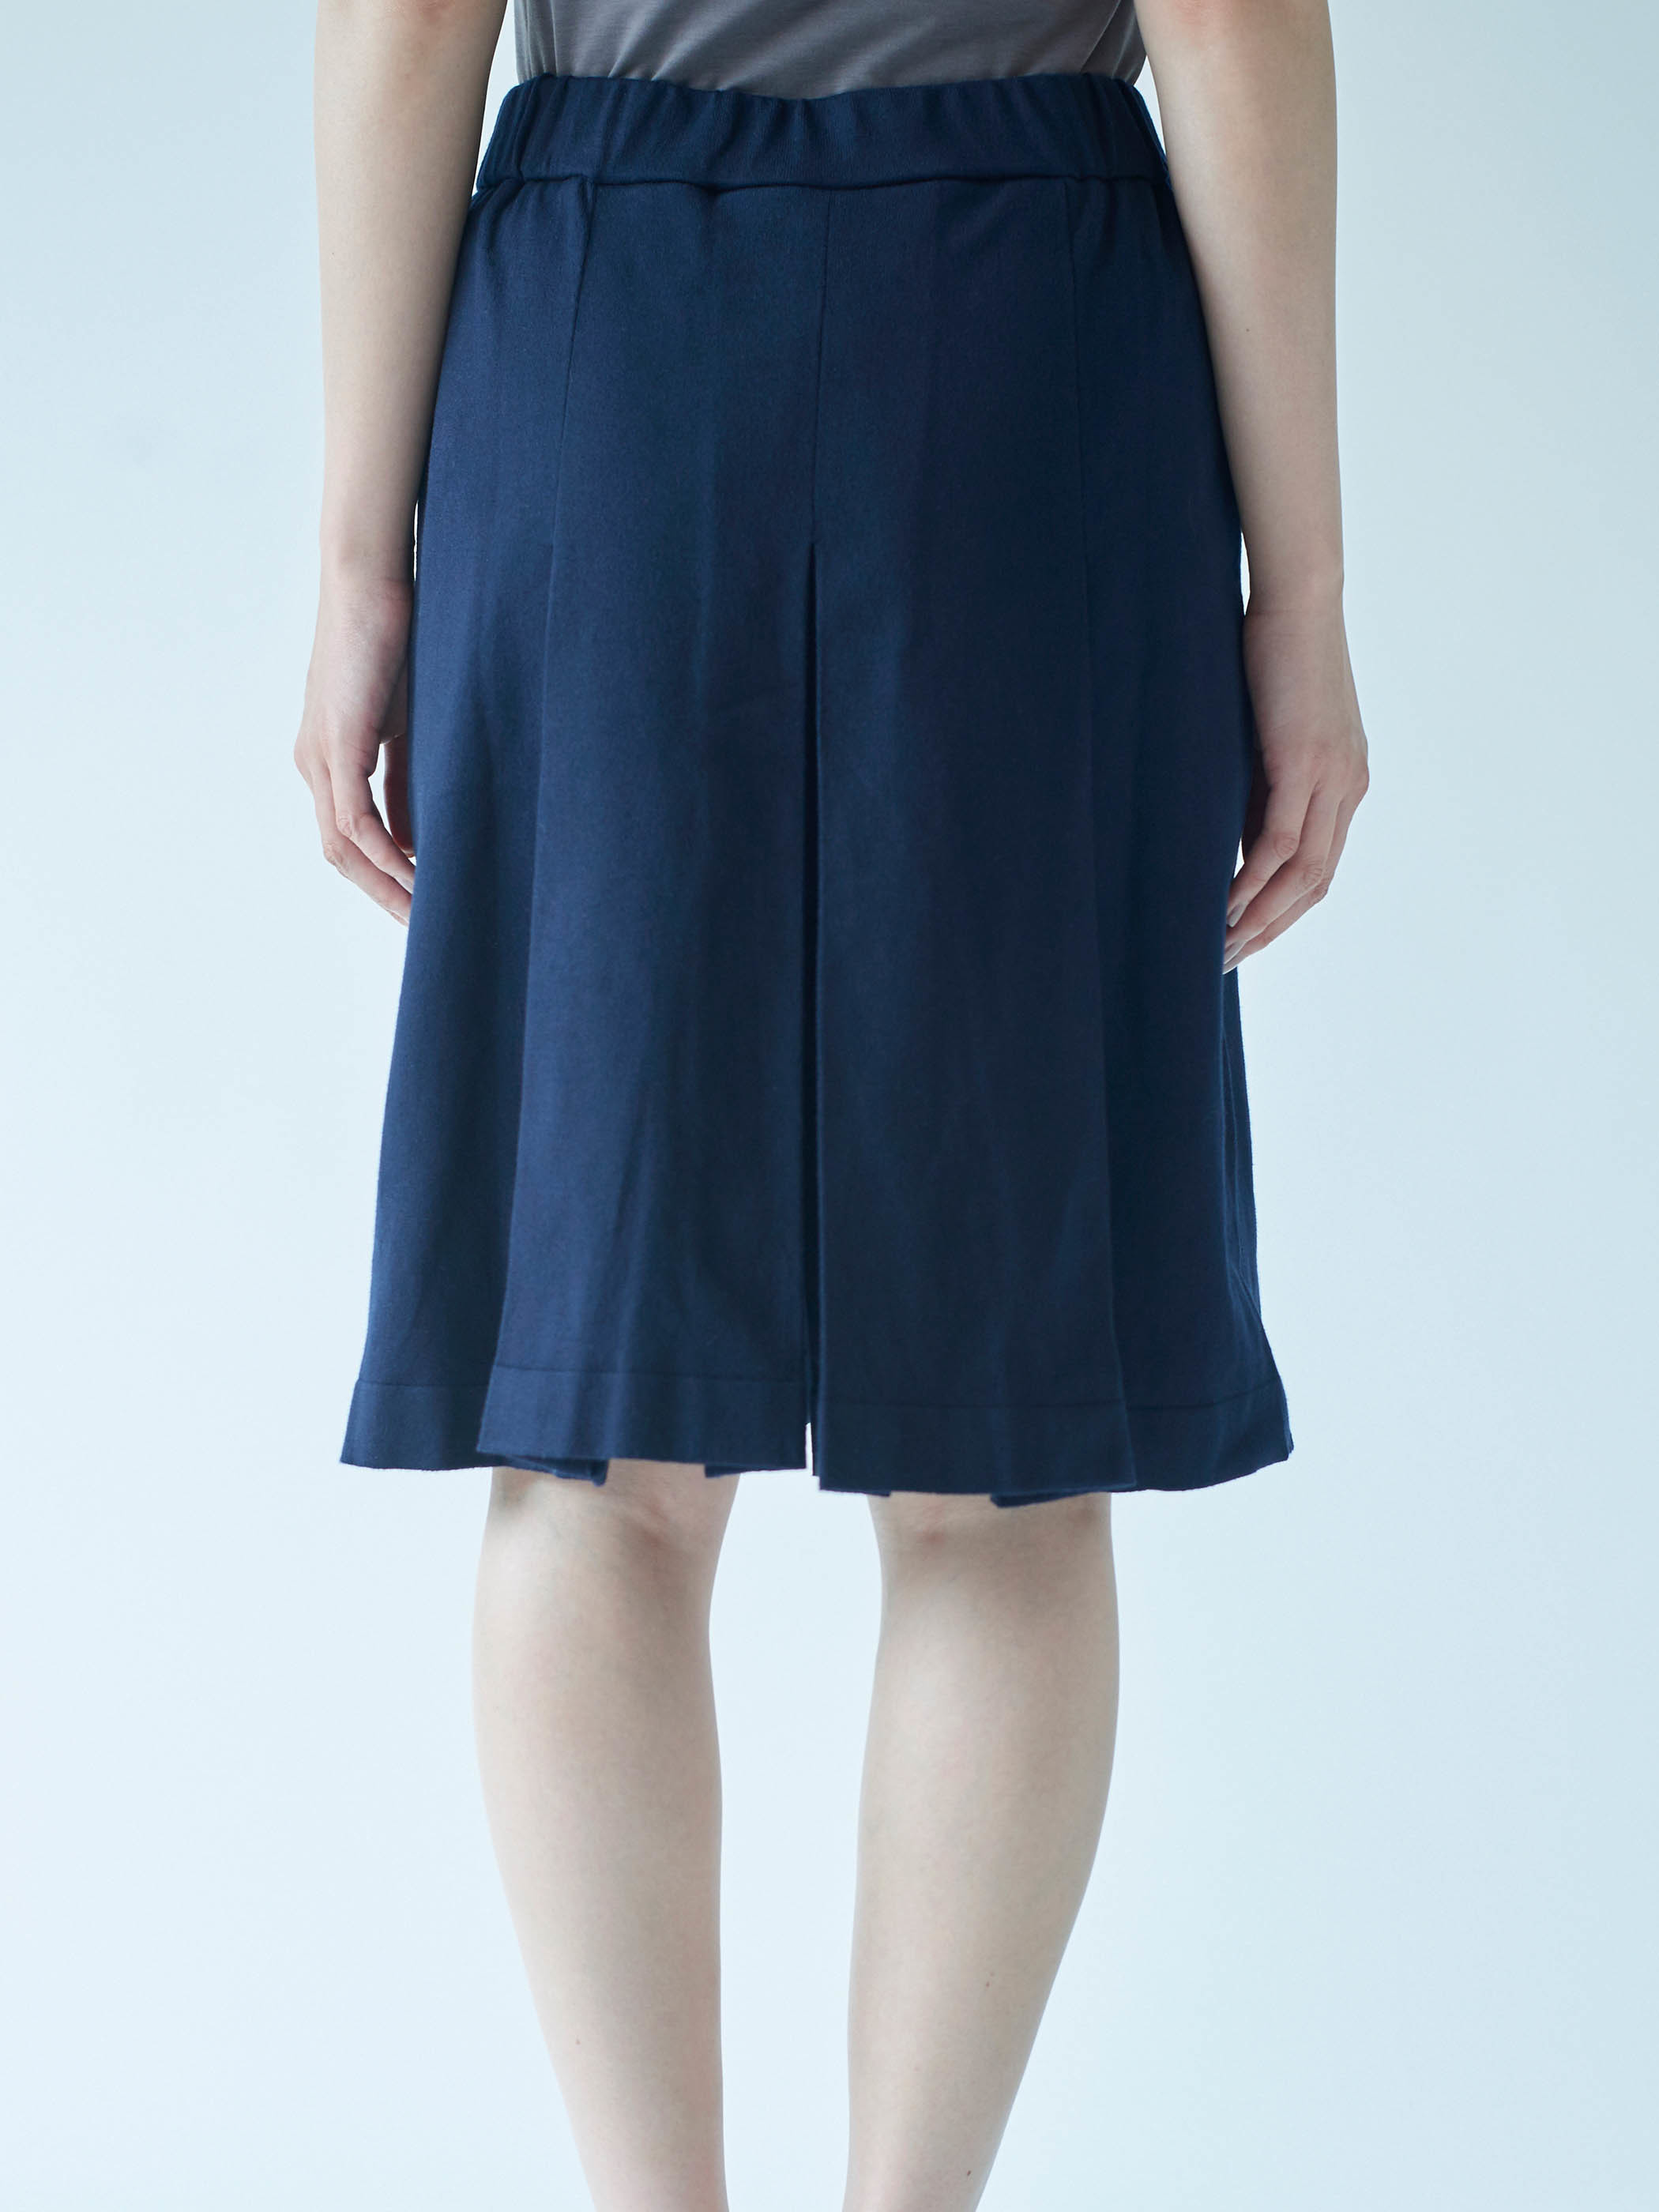 Work Wear collection Women’s Culotte Skirt Navy(キュロットスカート・ネイビー)